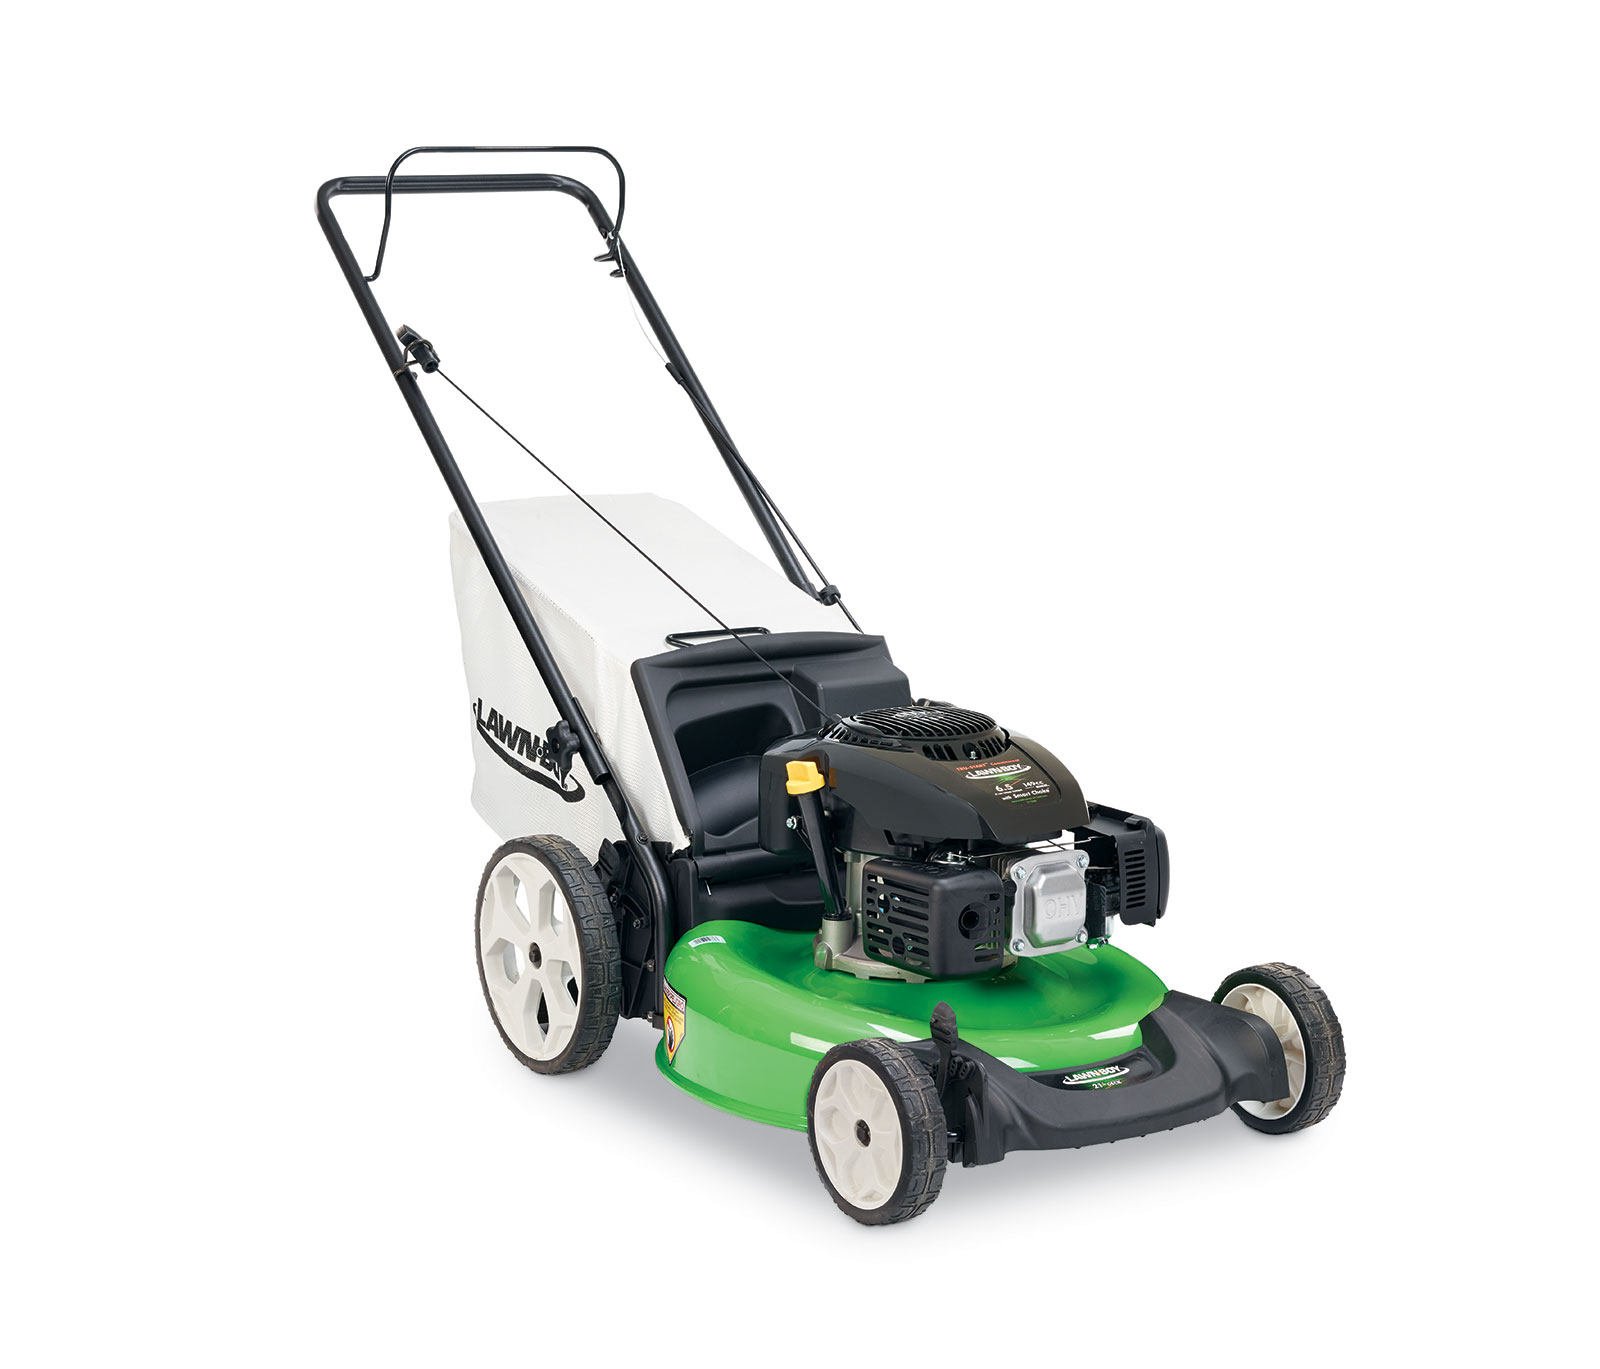 Details about   NOS Lawn mower Hi-Lift blade 19-3/4" long Lawn-Boy 92-016 10874 20" cut 